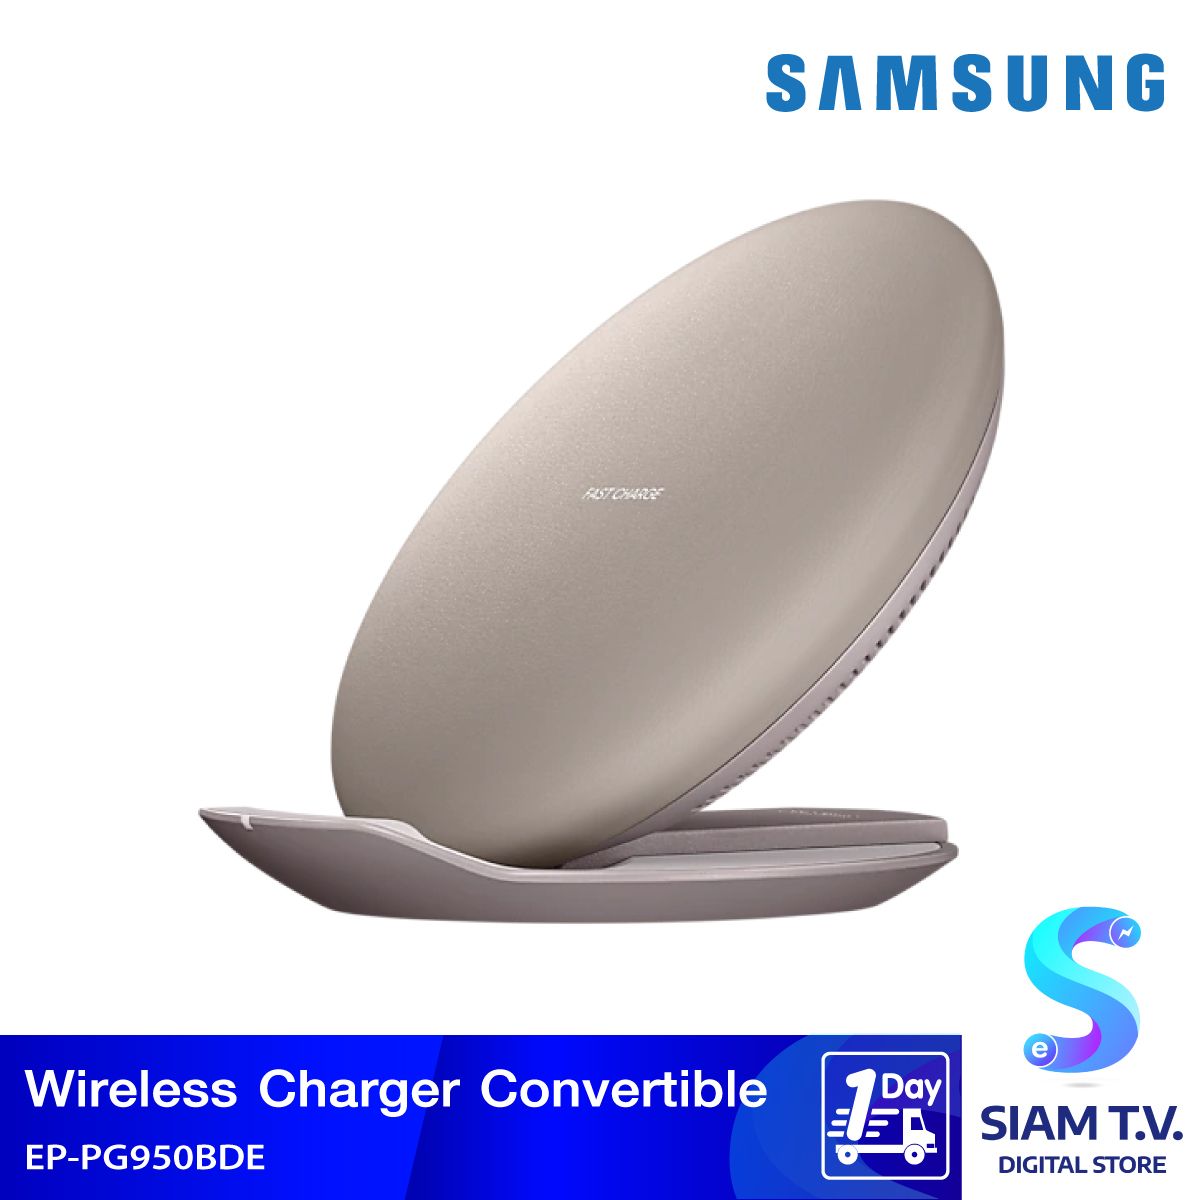 Samsung Wireless Charger Convertible รุ่นPG950